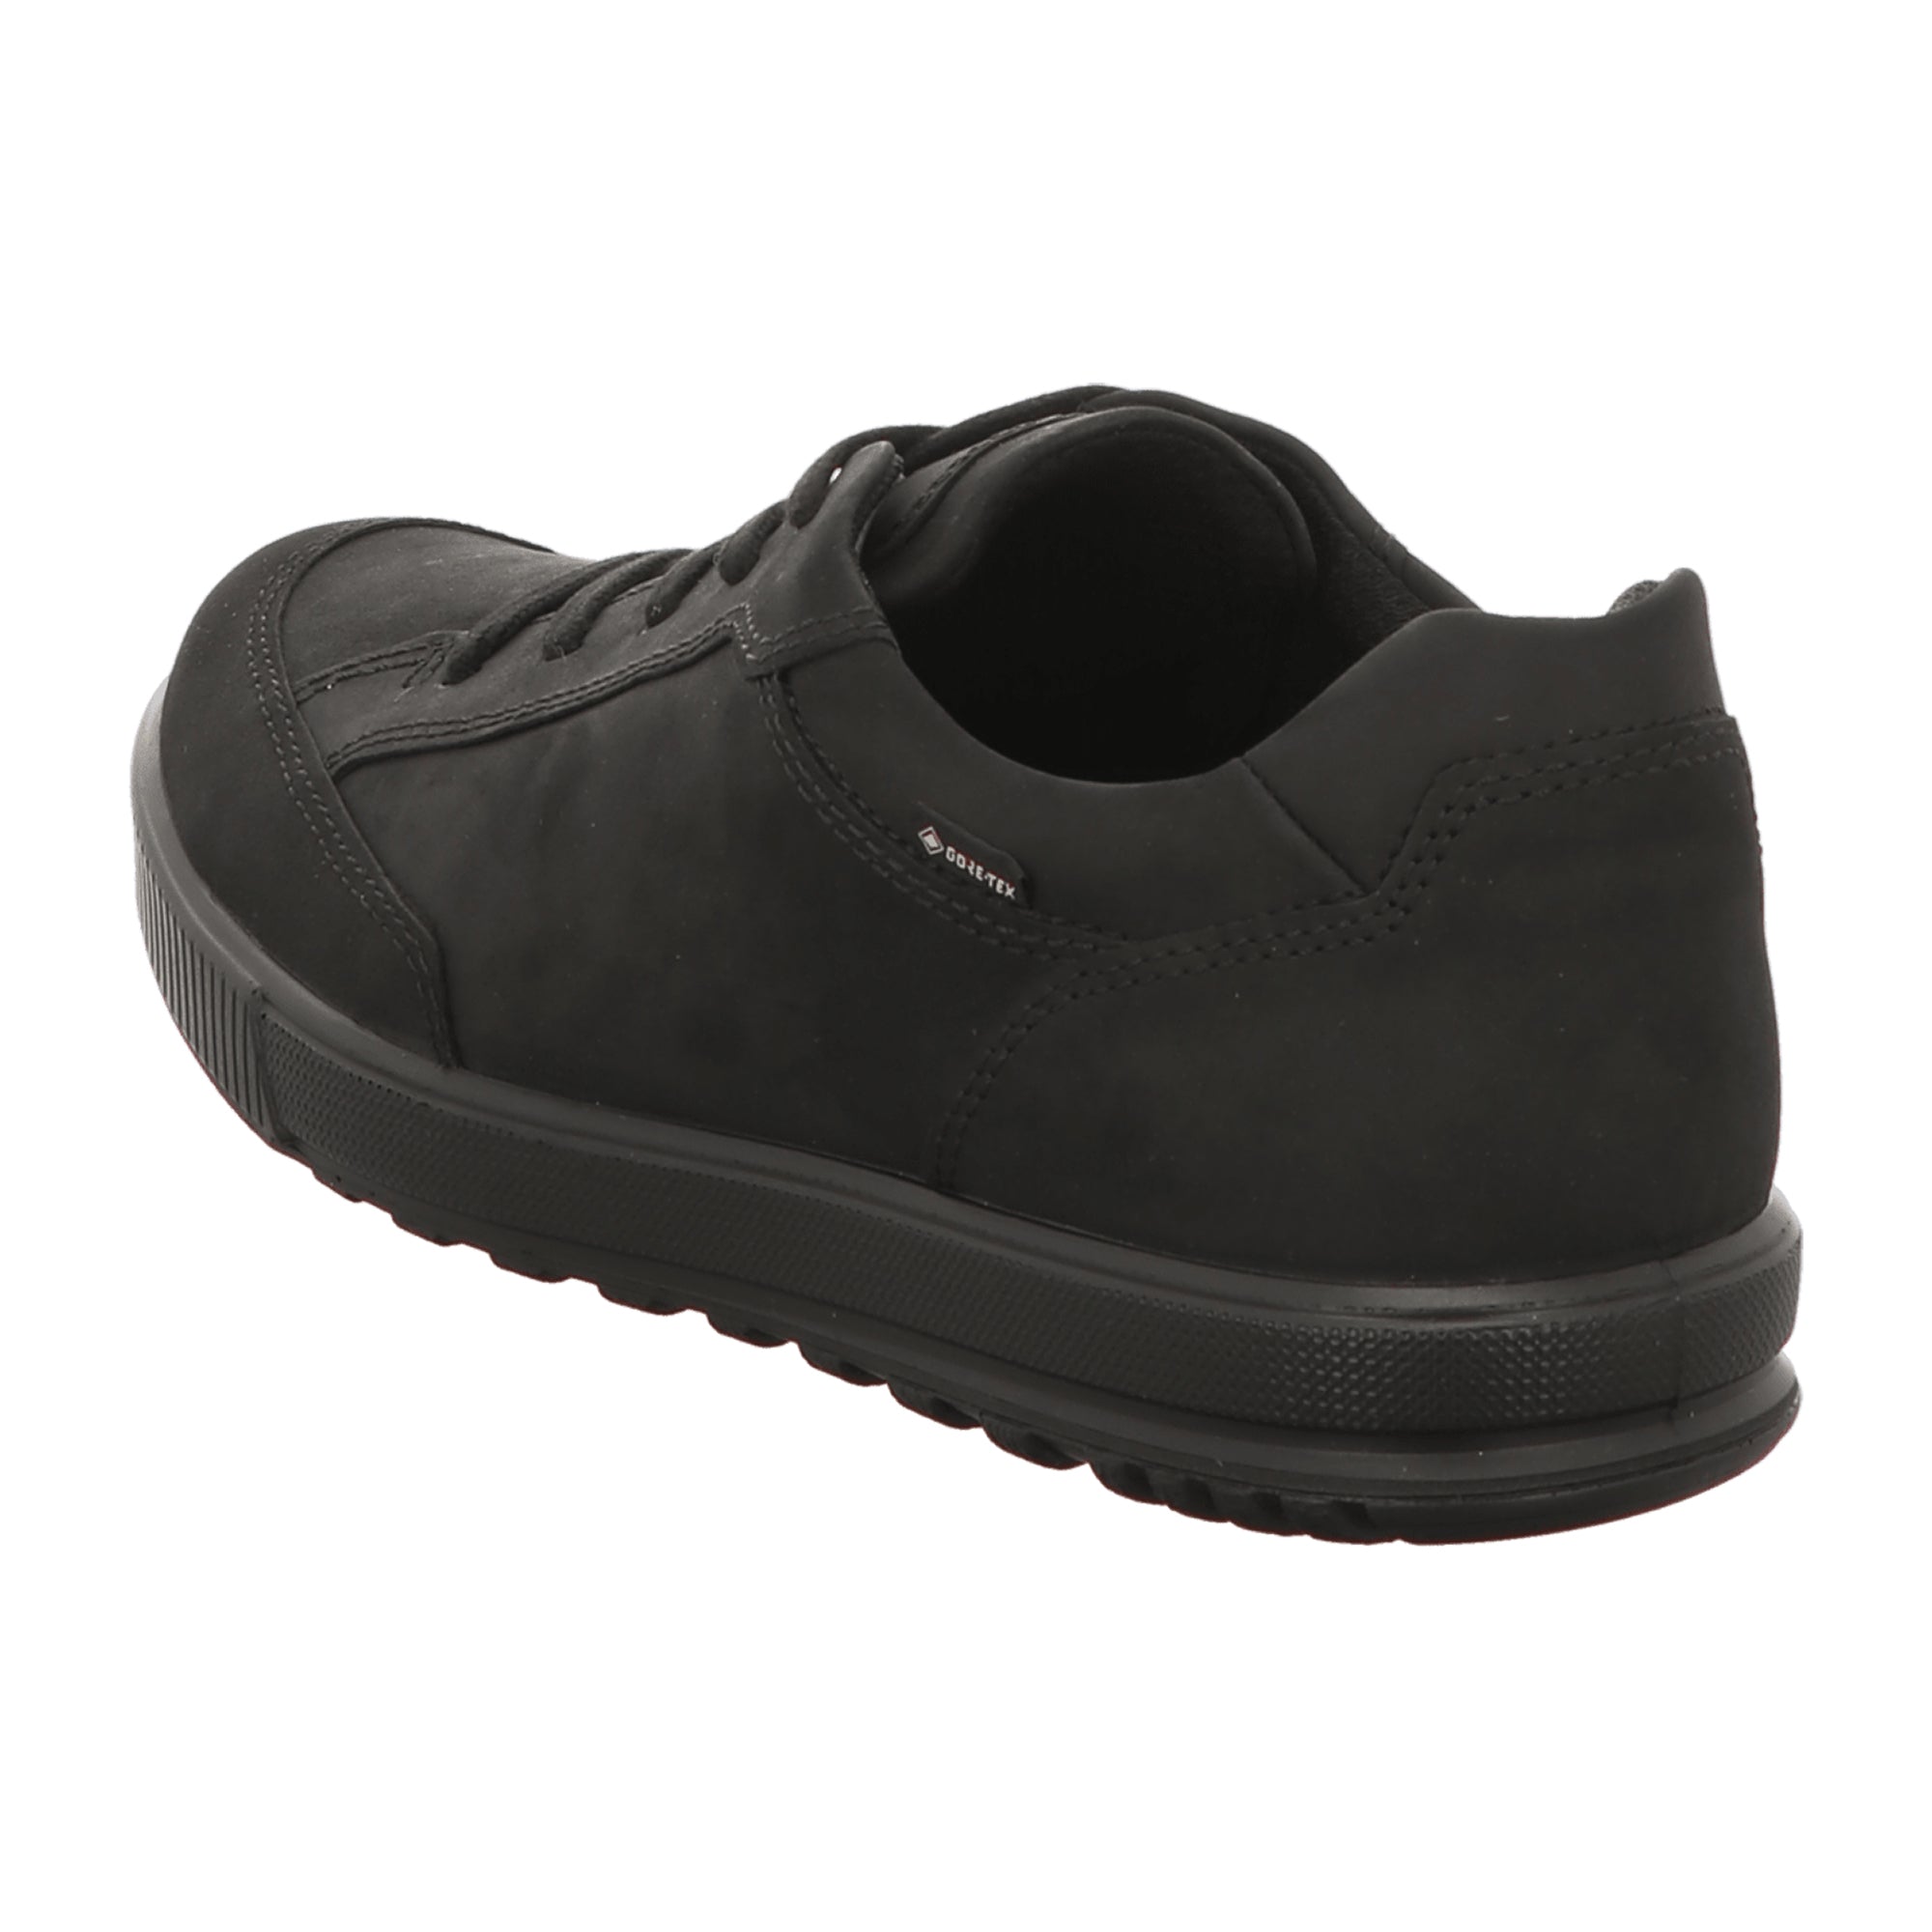 Ecco Ennio Men's Black Casual Shoes - Stylish & Durable